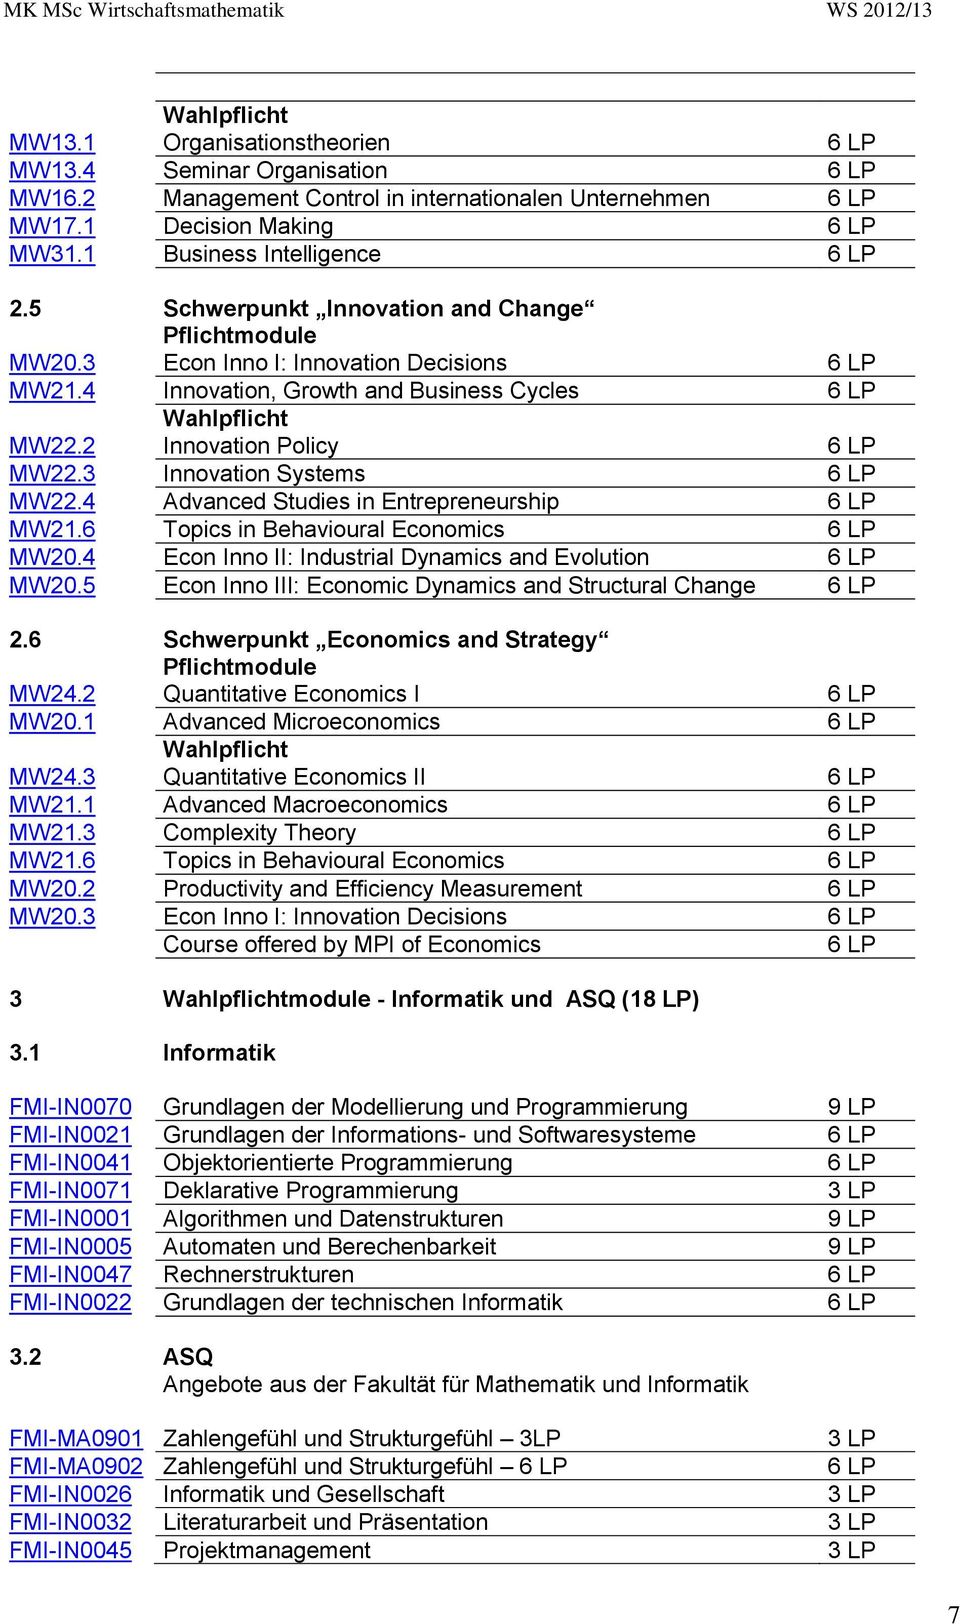 2 Innovation Policy 6 LP MW22.3 Innovation Systems 6 LP MW22.4 Advanced Studies in Entrepreneurship 6 LP MW21.6 Topics in Behavioural Economics 6 LP MW20.